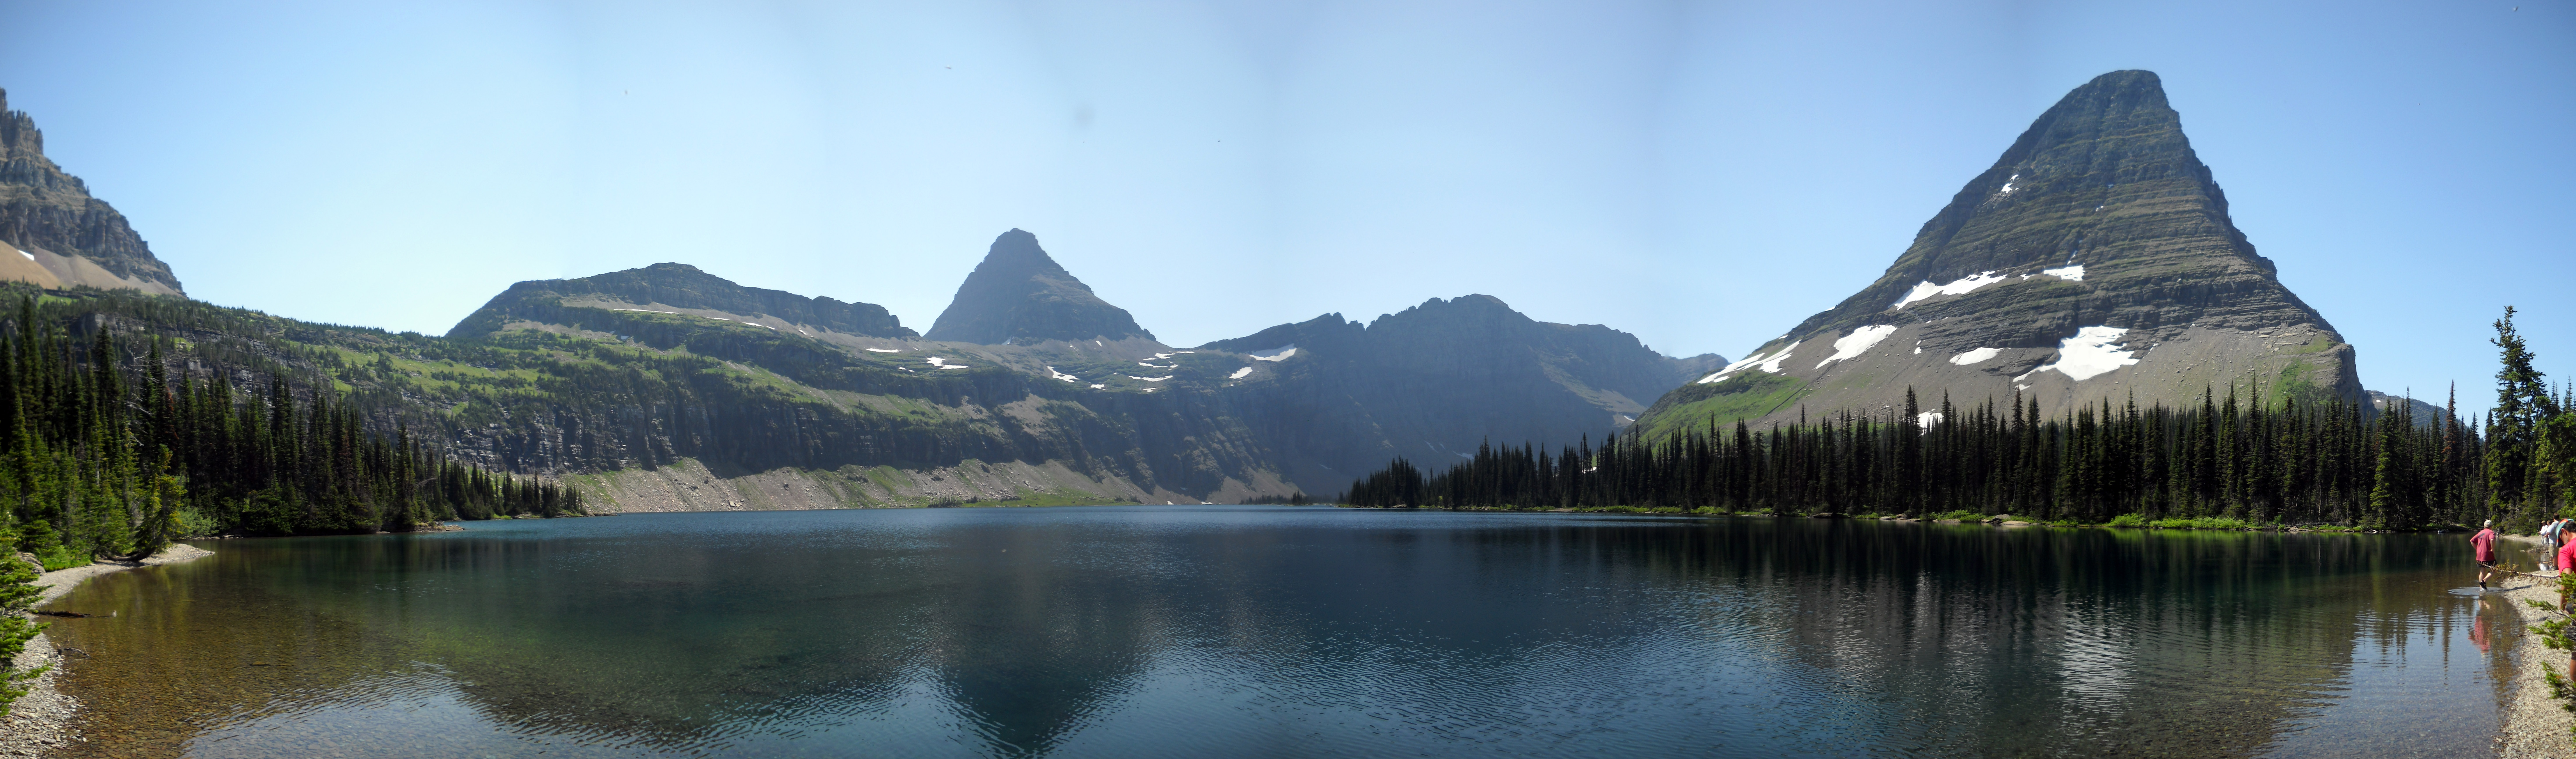 File:Hidden Lake Panorama 1.jpg - Wikimedia Commons